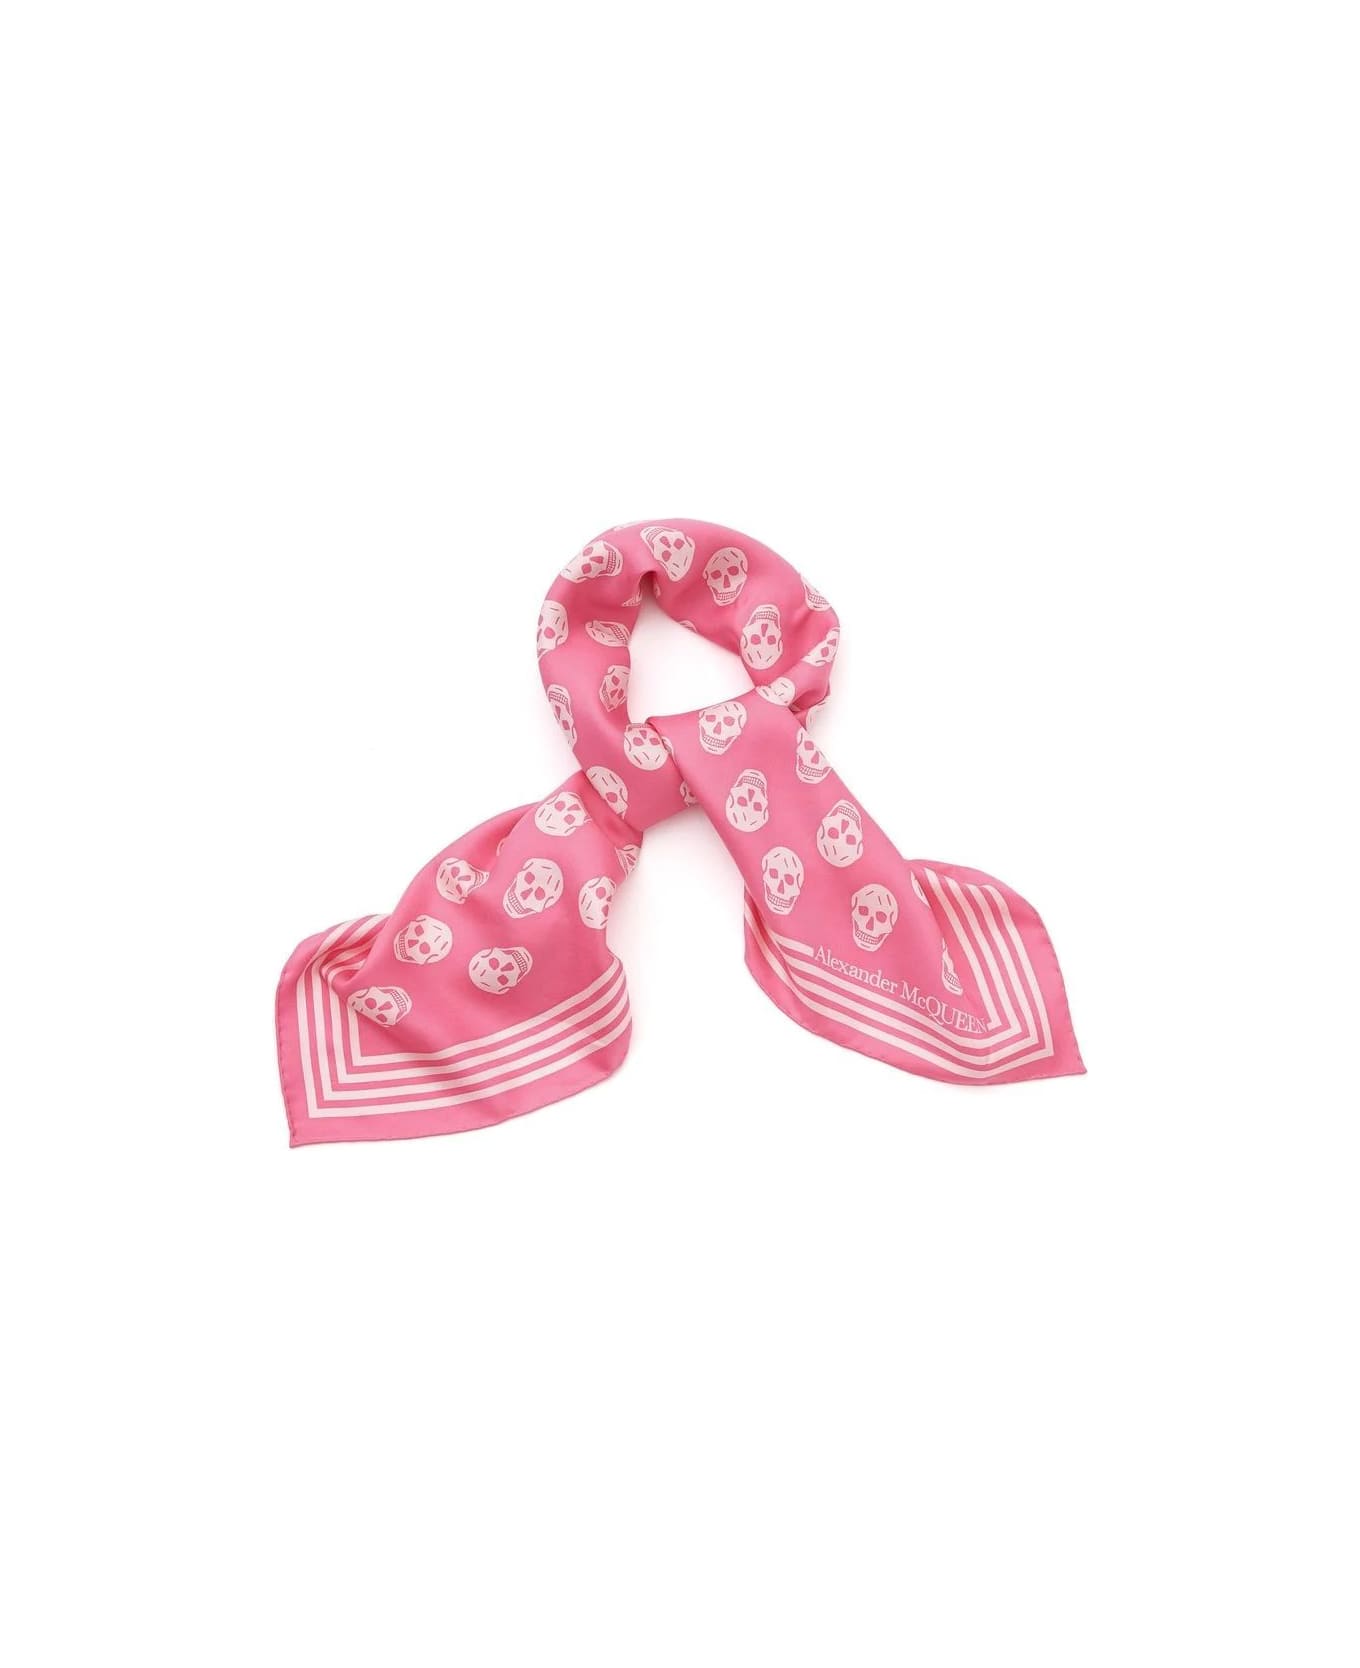 Alexander McQueen Pink Silk Scarf With Skull Pattern - Rosa